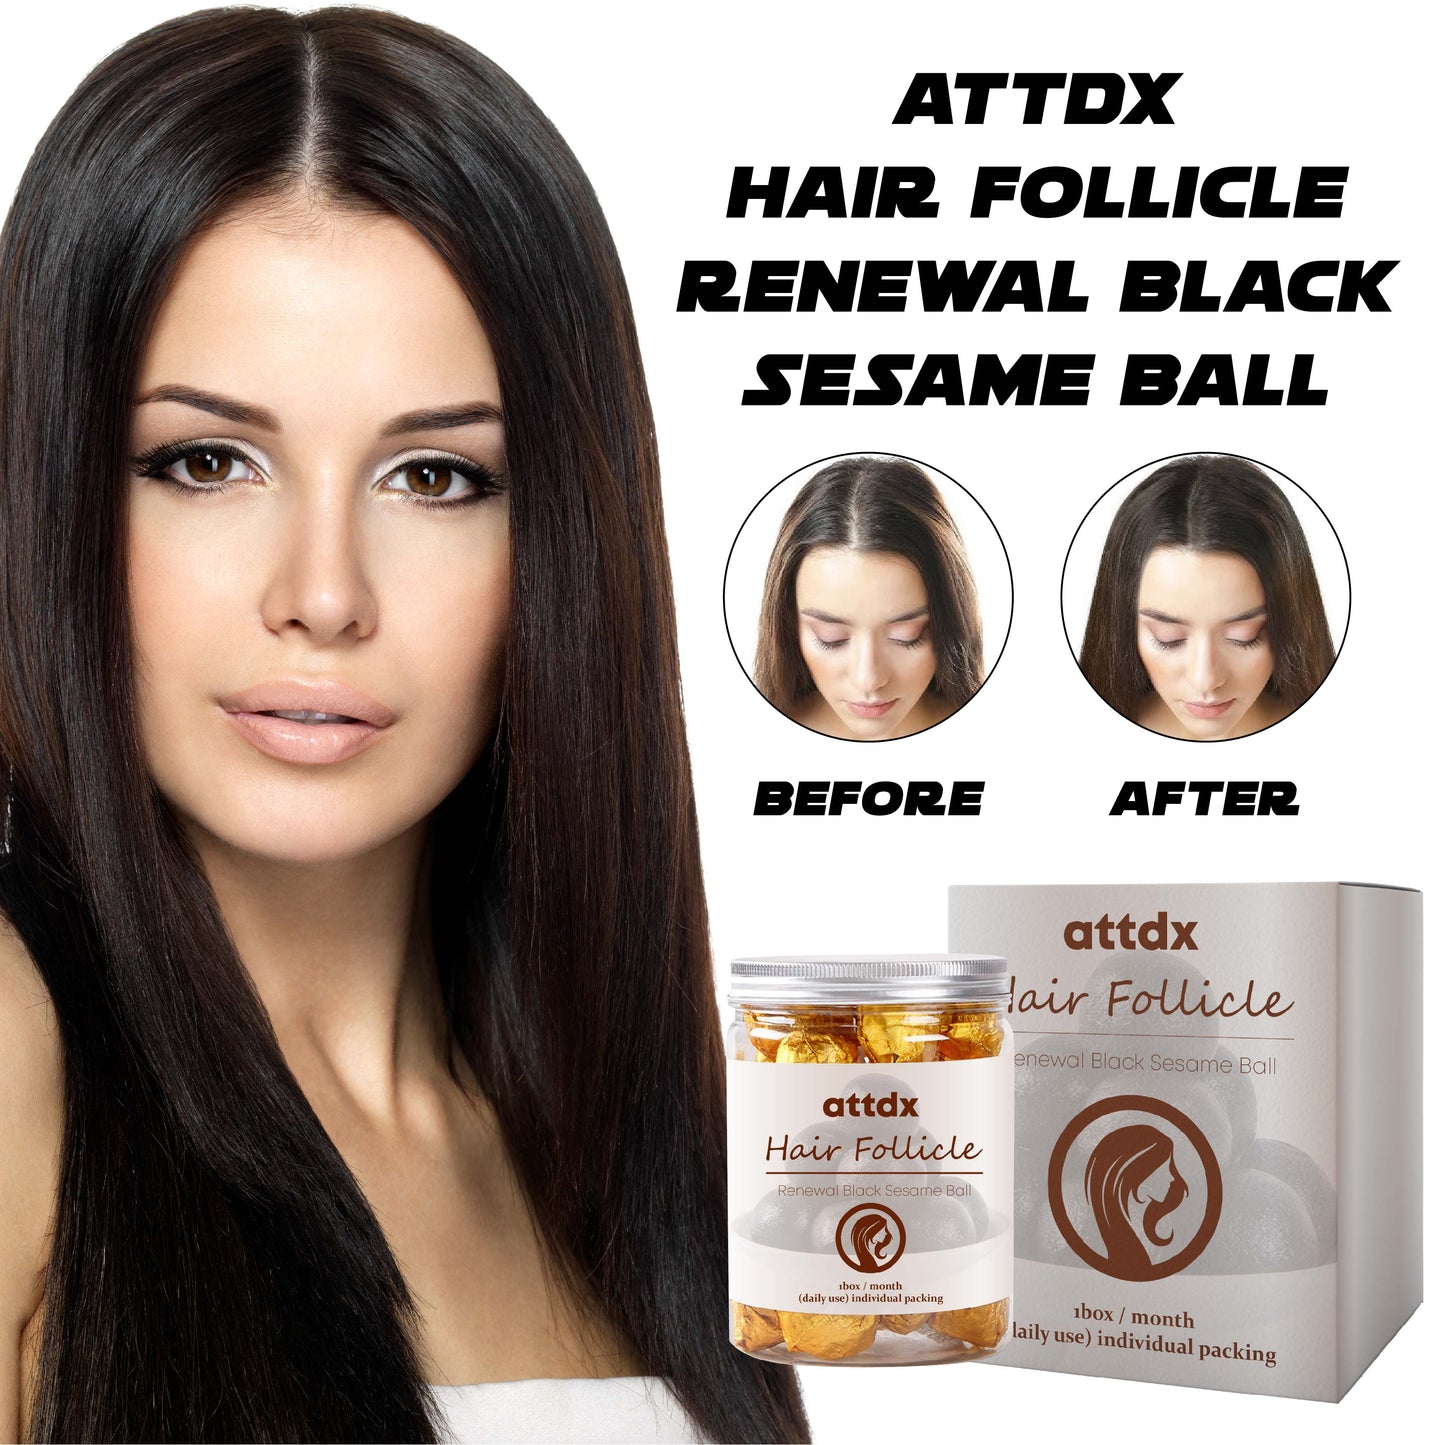 ATTDX Hair Follicle Renewal Black Sesame Ball